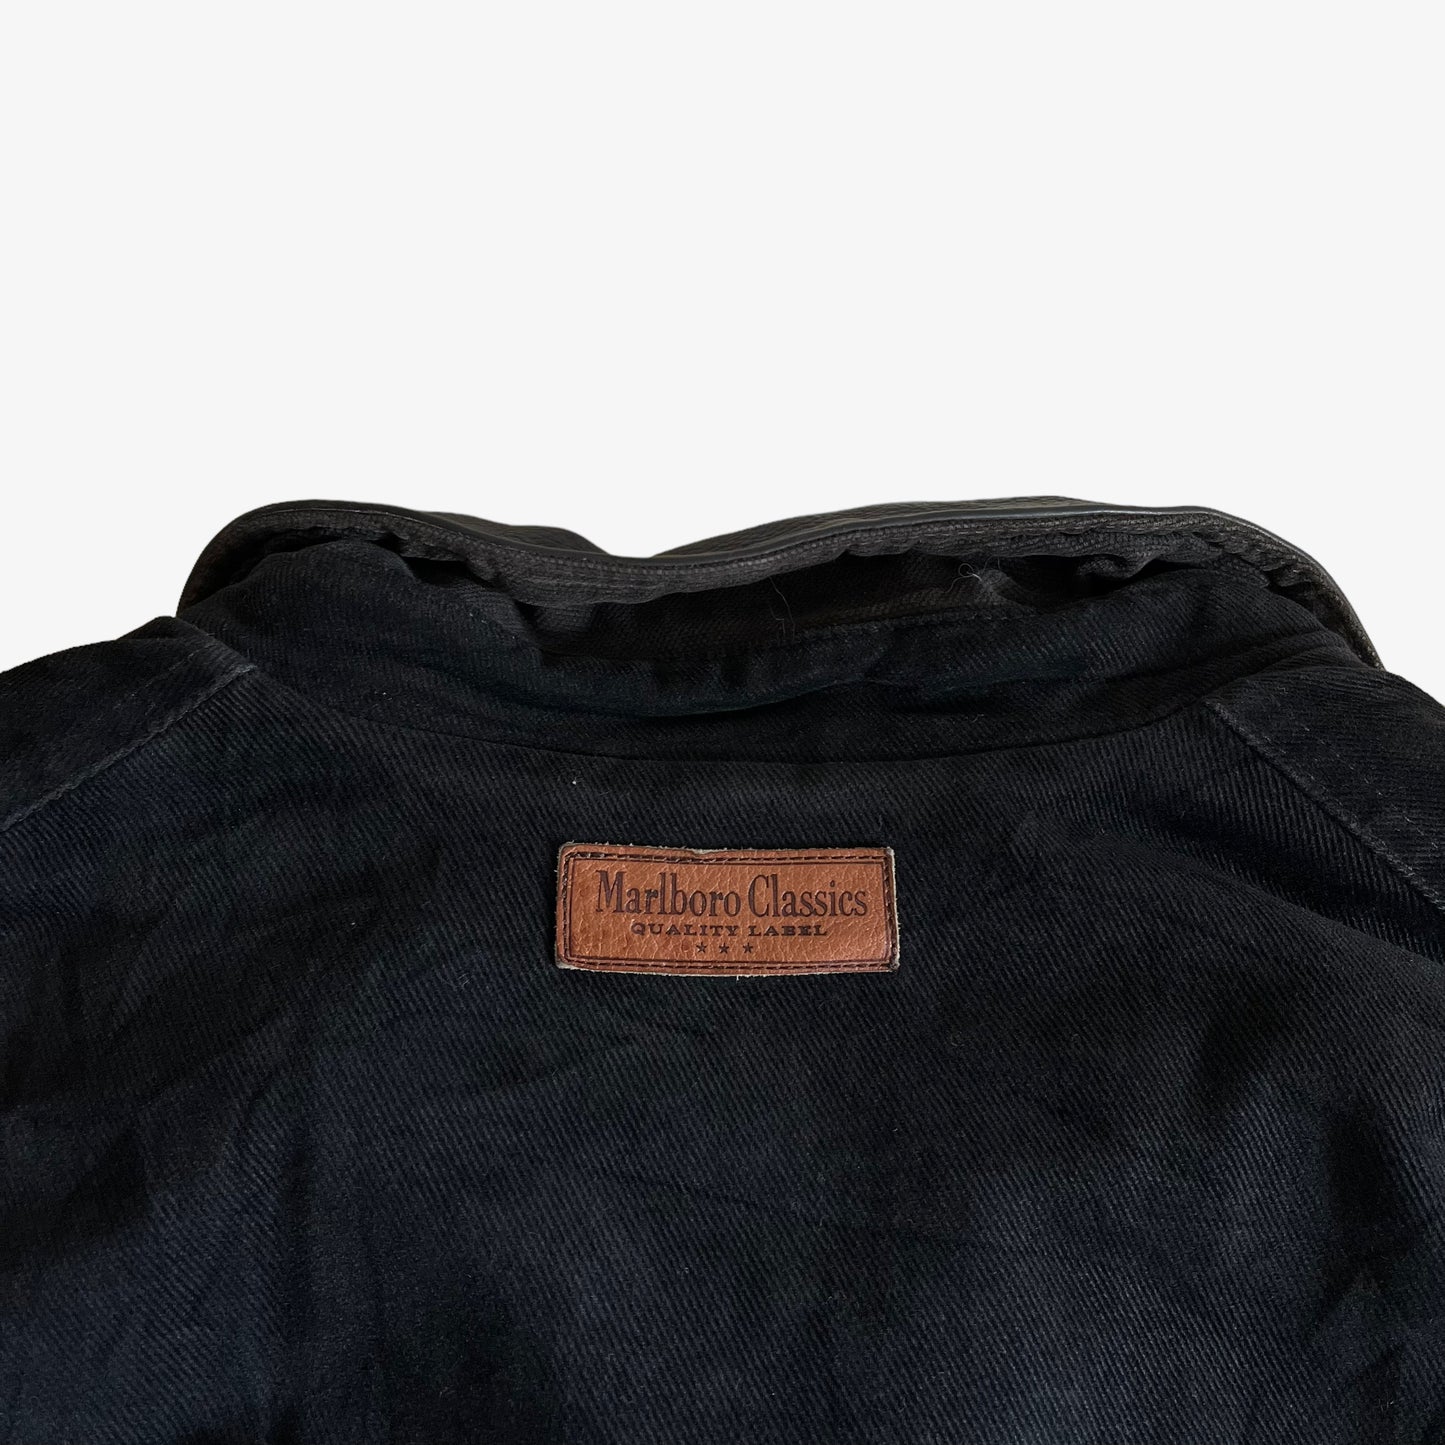 Vintage 90s Marlboro Classics Black Workwear Jacket With Leather Collar Back Tag - Casspios Dream